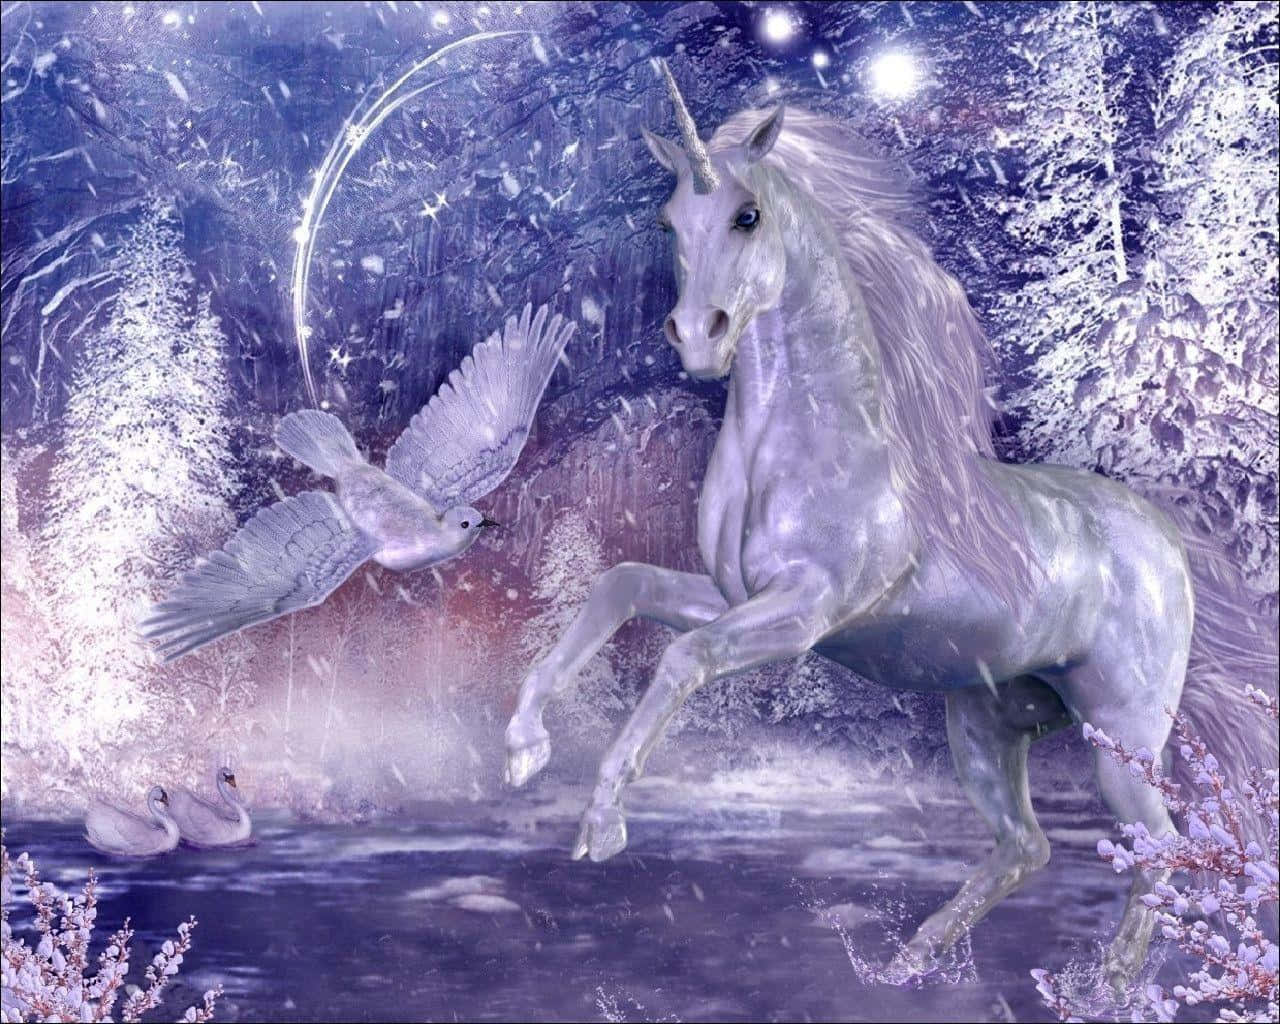 Enchanted 3D Unicorn in a Magical Landscape Wallpaper